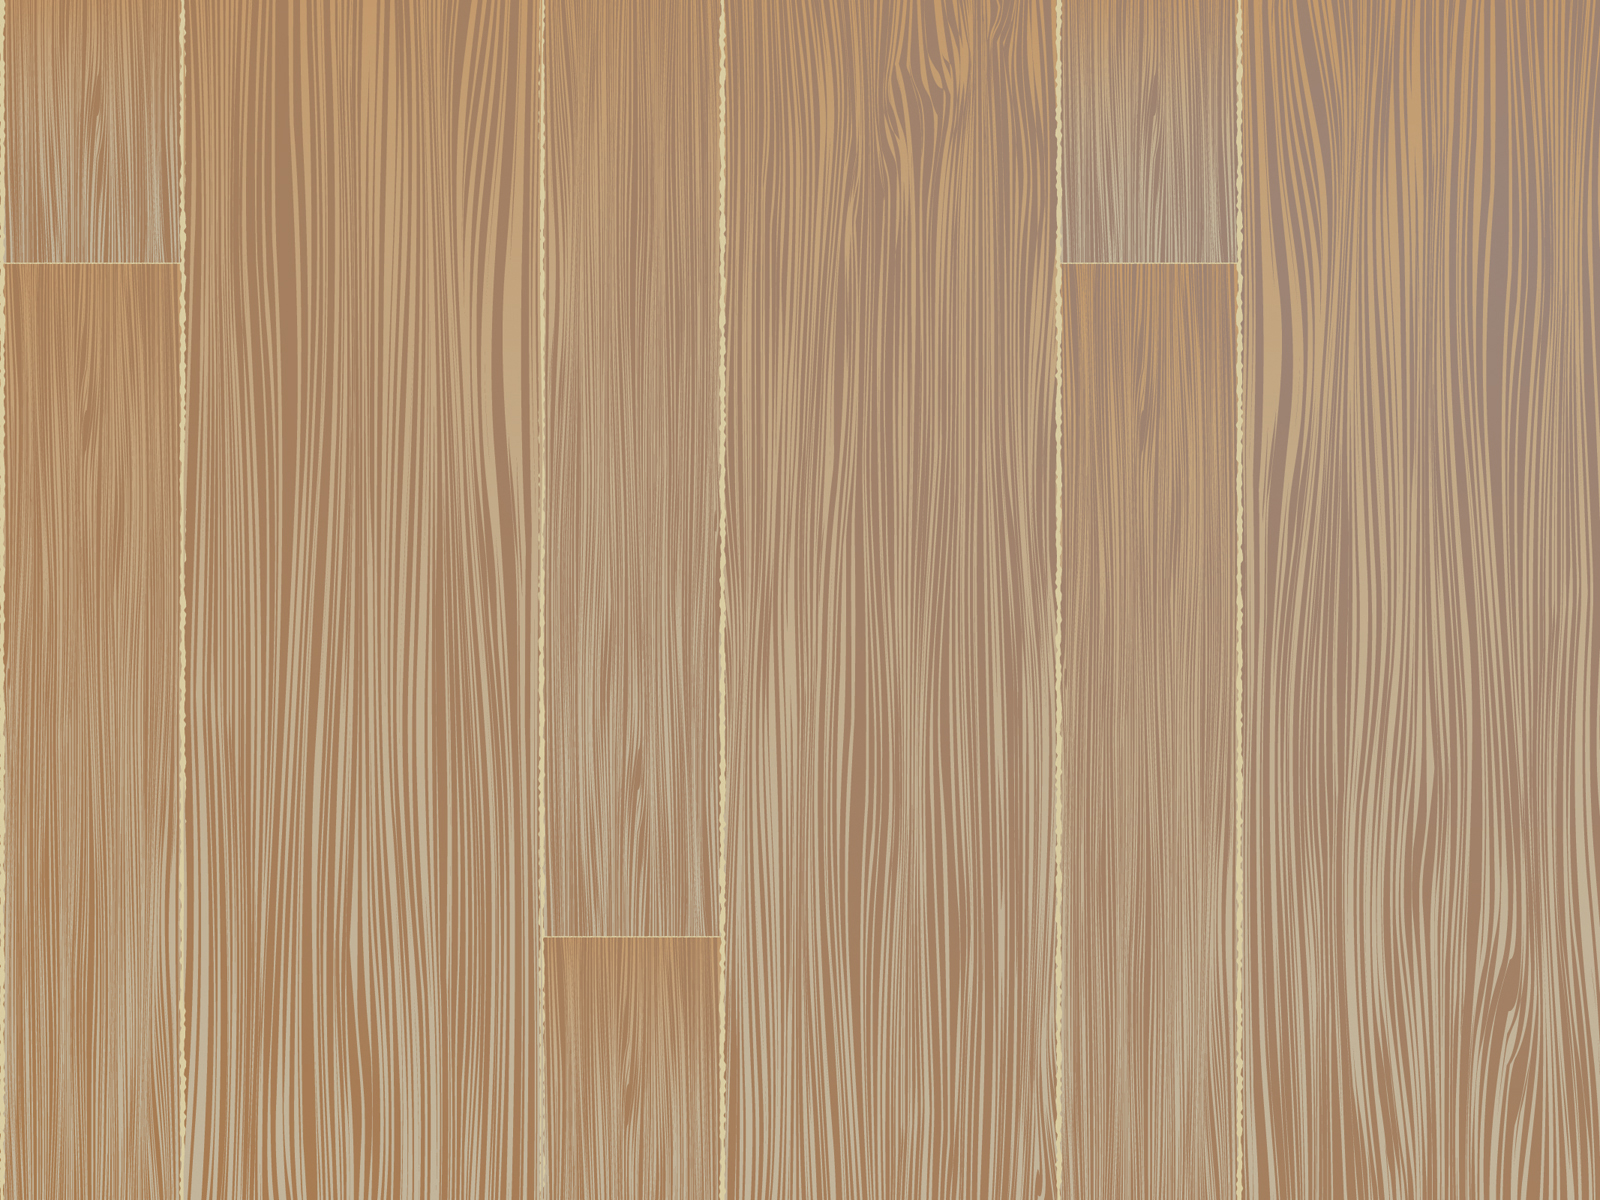 Wooden Tiled PPT Backgrounds